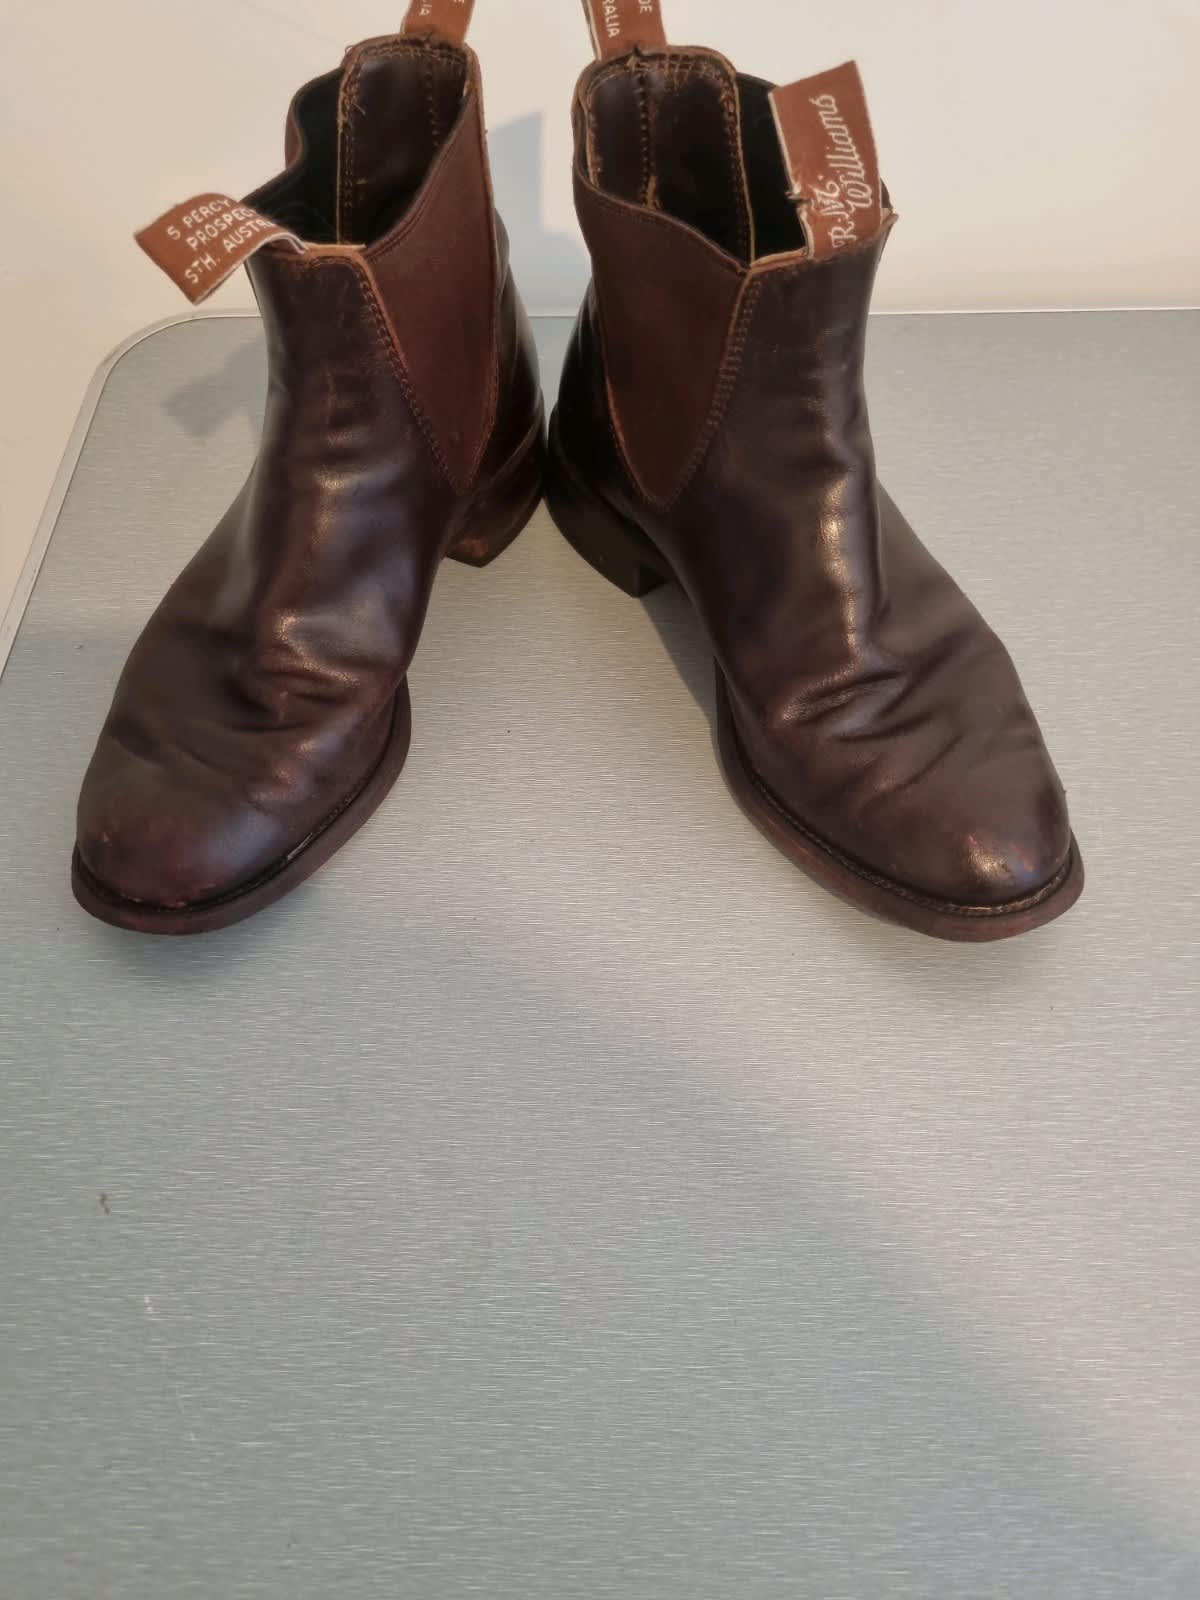 R.M. WILLIAMS Men's Leather Boots/ Shoes* Size 7 G* Great Quality, Men's Shoes, Gumtree Australia Gold Coast City - Benowa